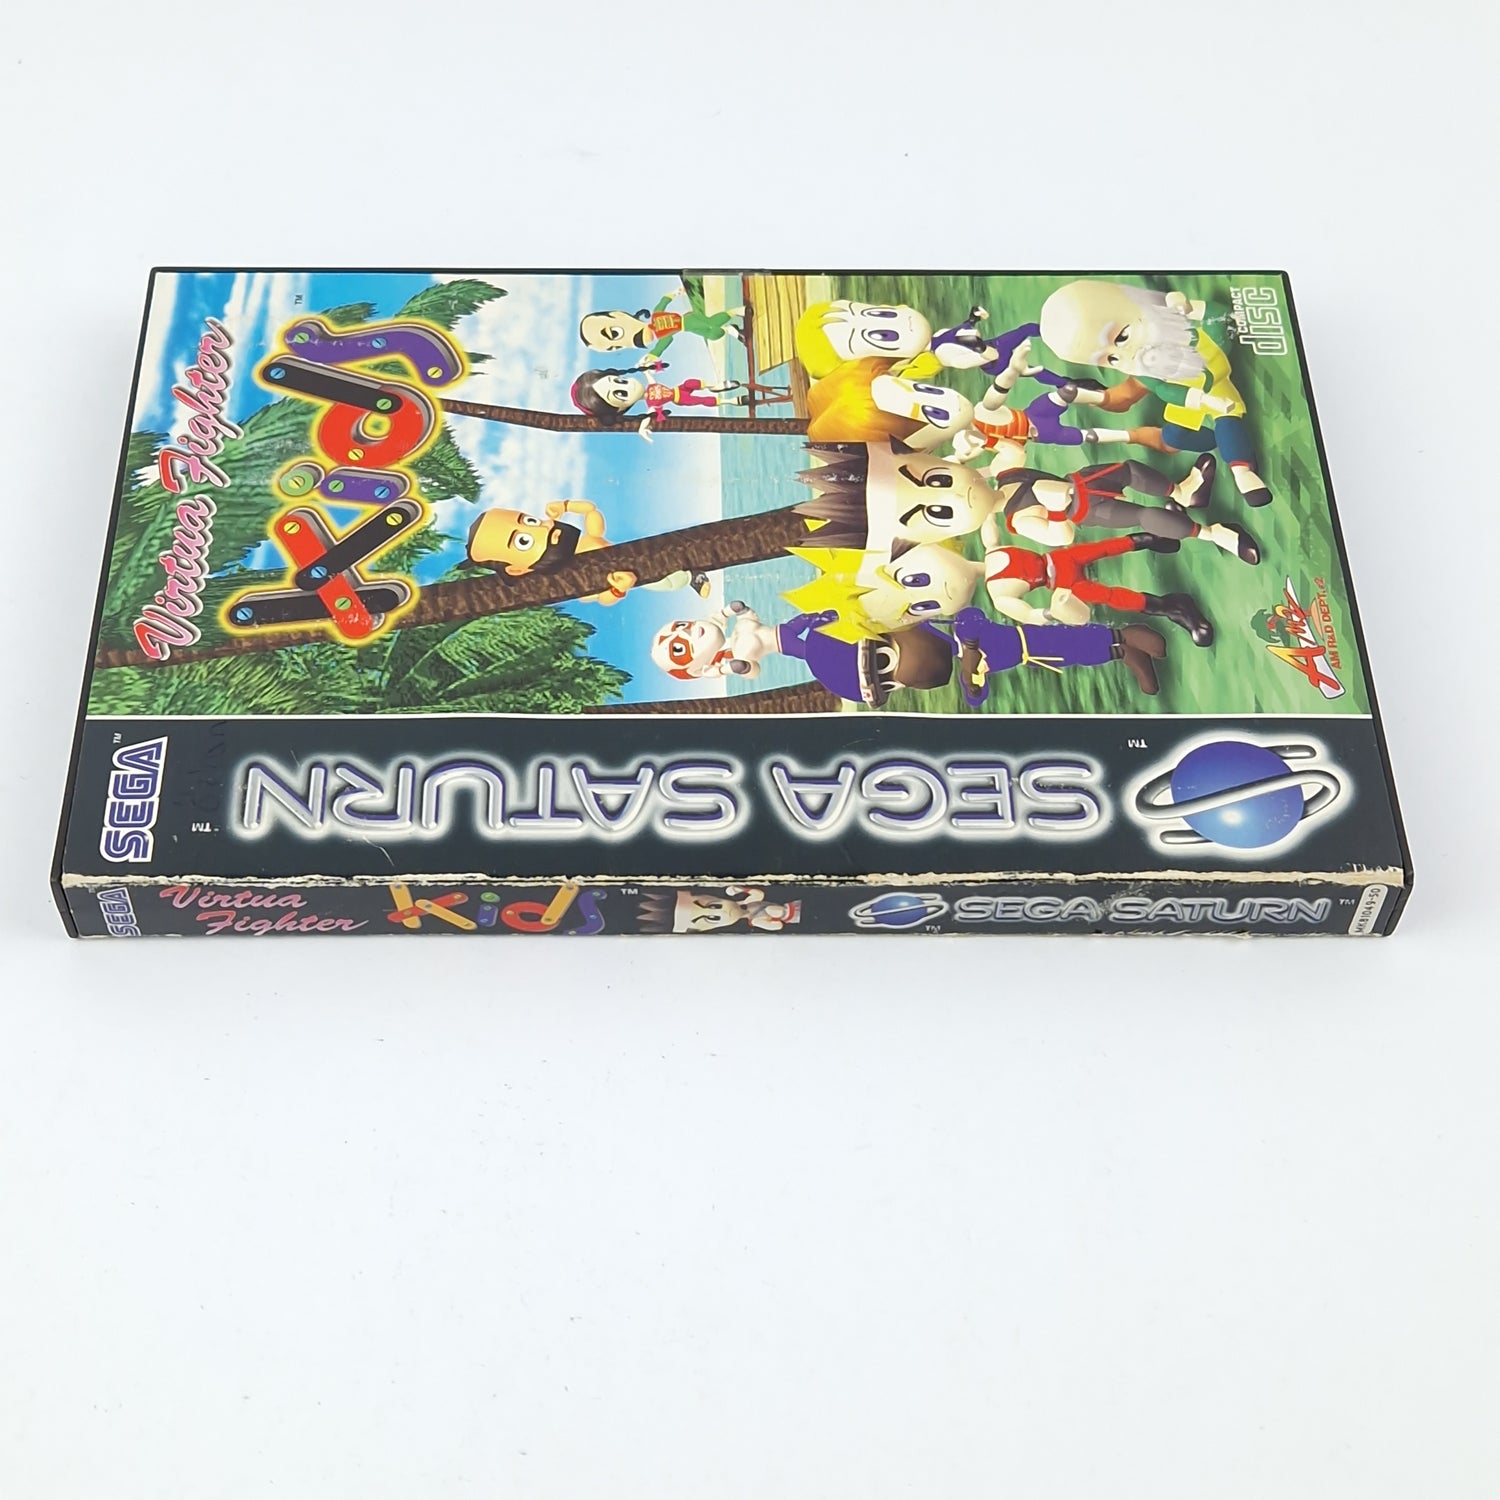 Sega Saturn Spiel : Virtua Fighter Kids - CD Anleitung OVP / PAL Disk